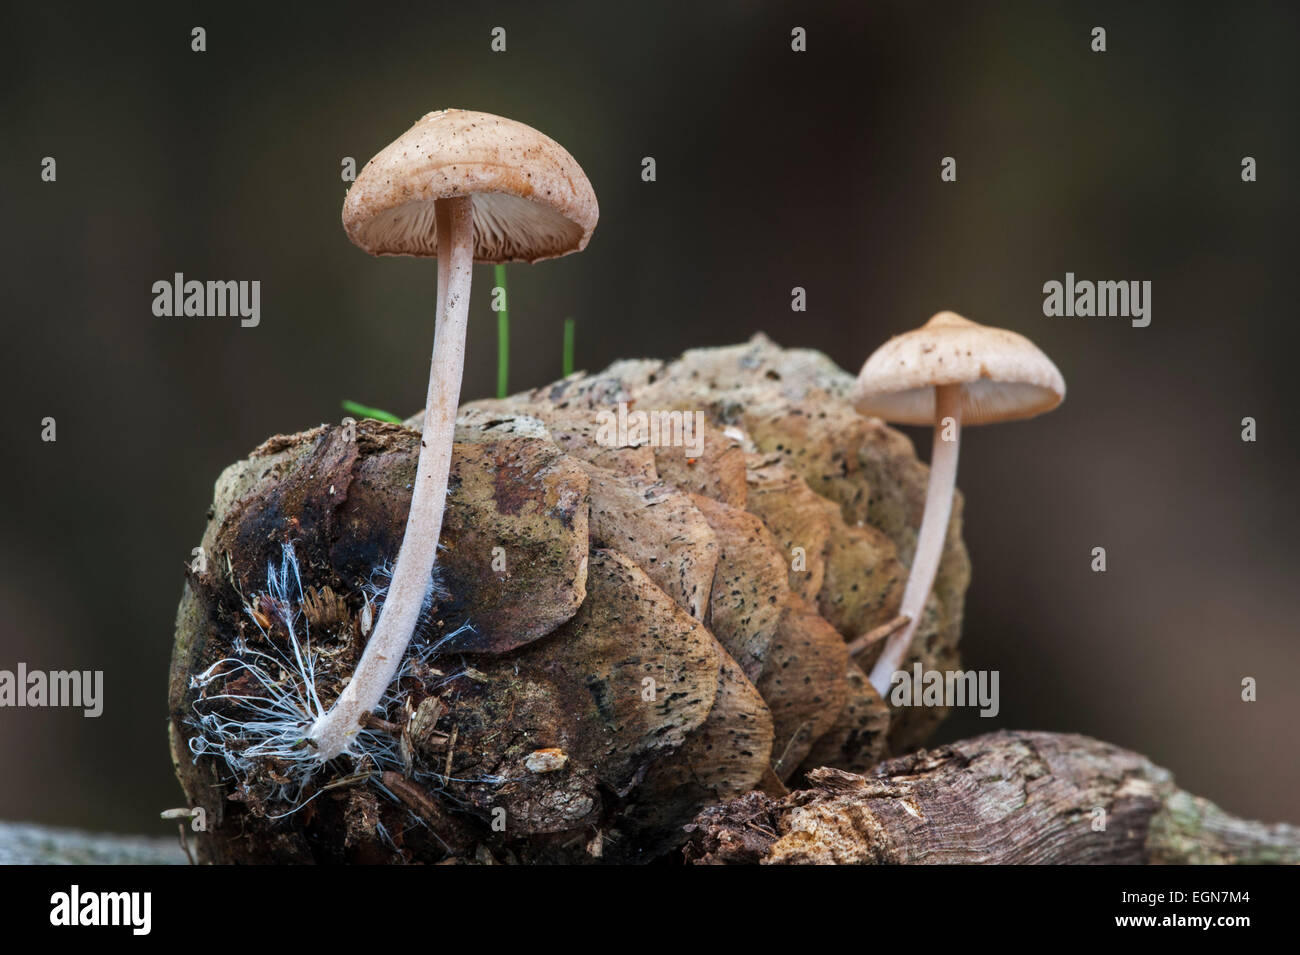 Conifercone cap (Baeospora myosura / Collybia myosura) growing on pinecone and showing mycelium resembling long coarse hairs Stock Photo